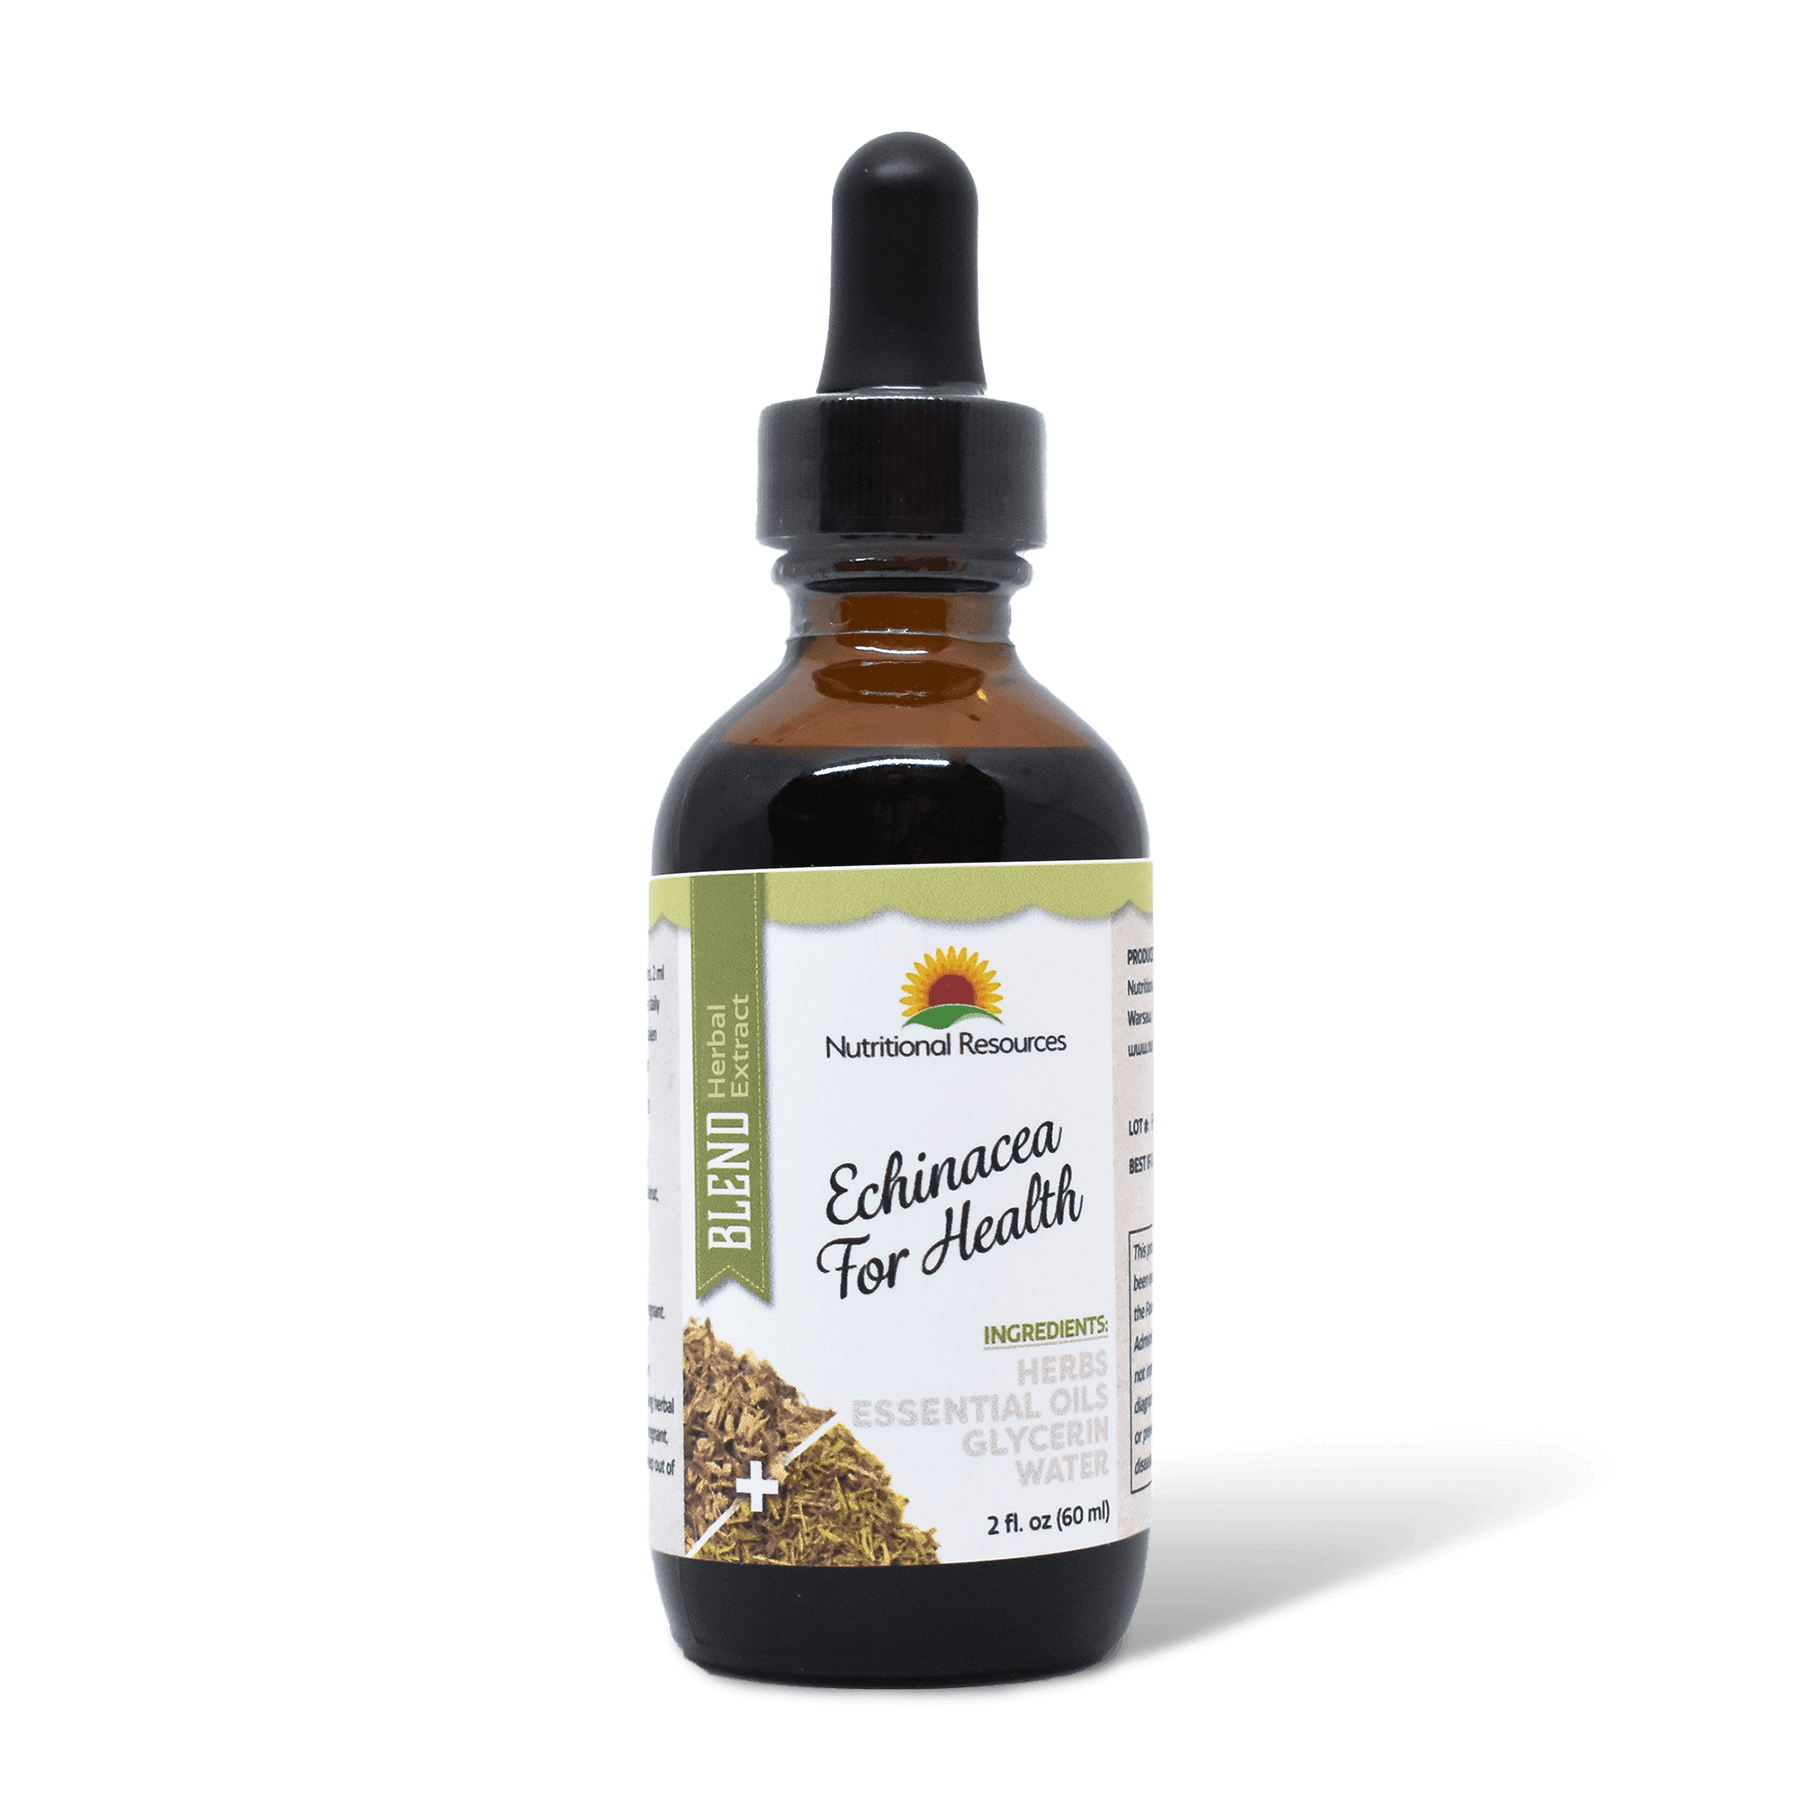 Echinacea for Health